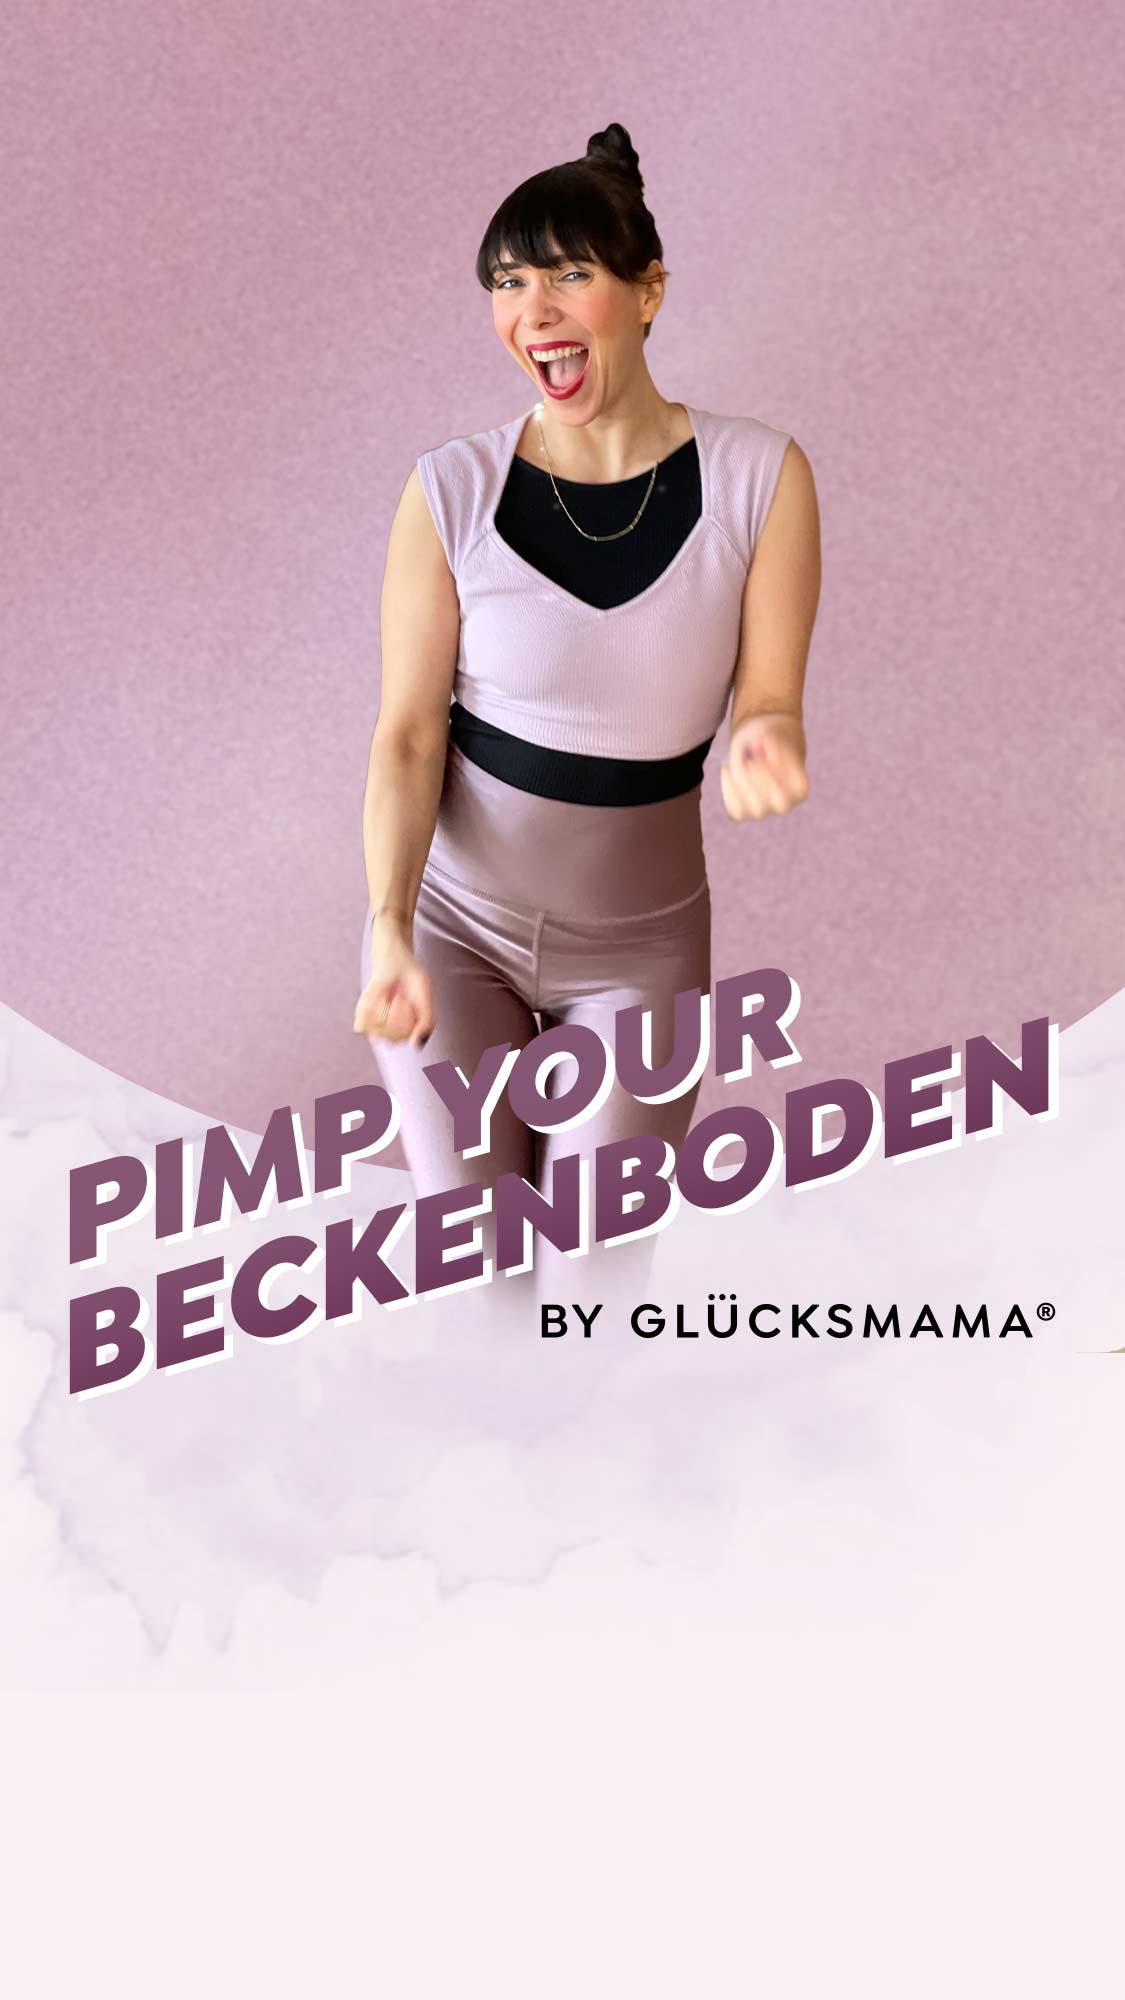 Pimp your Beckenboden